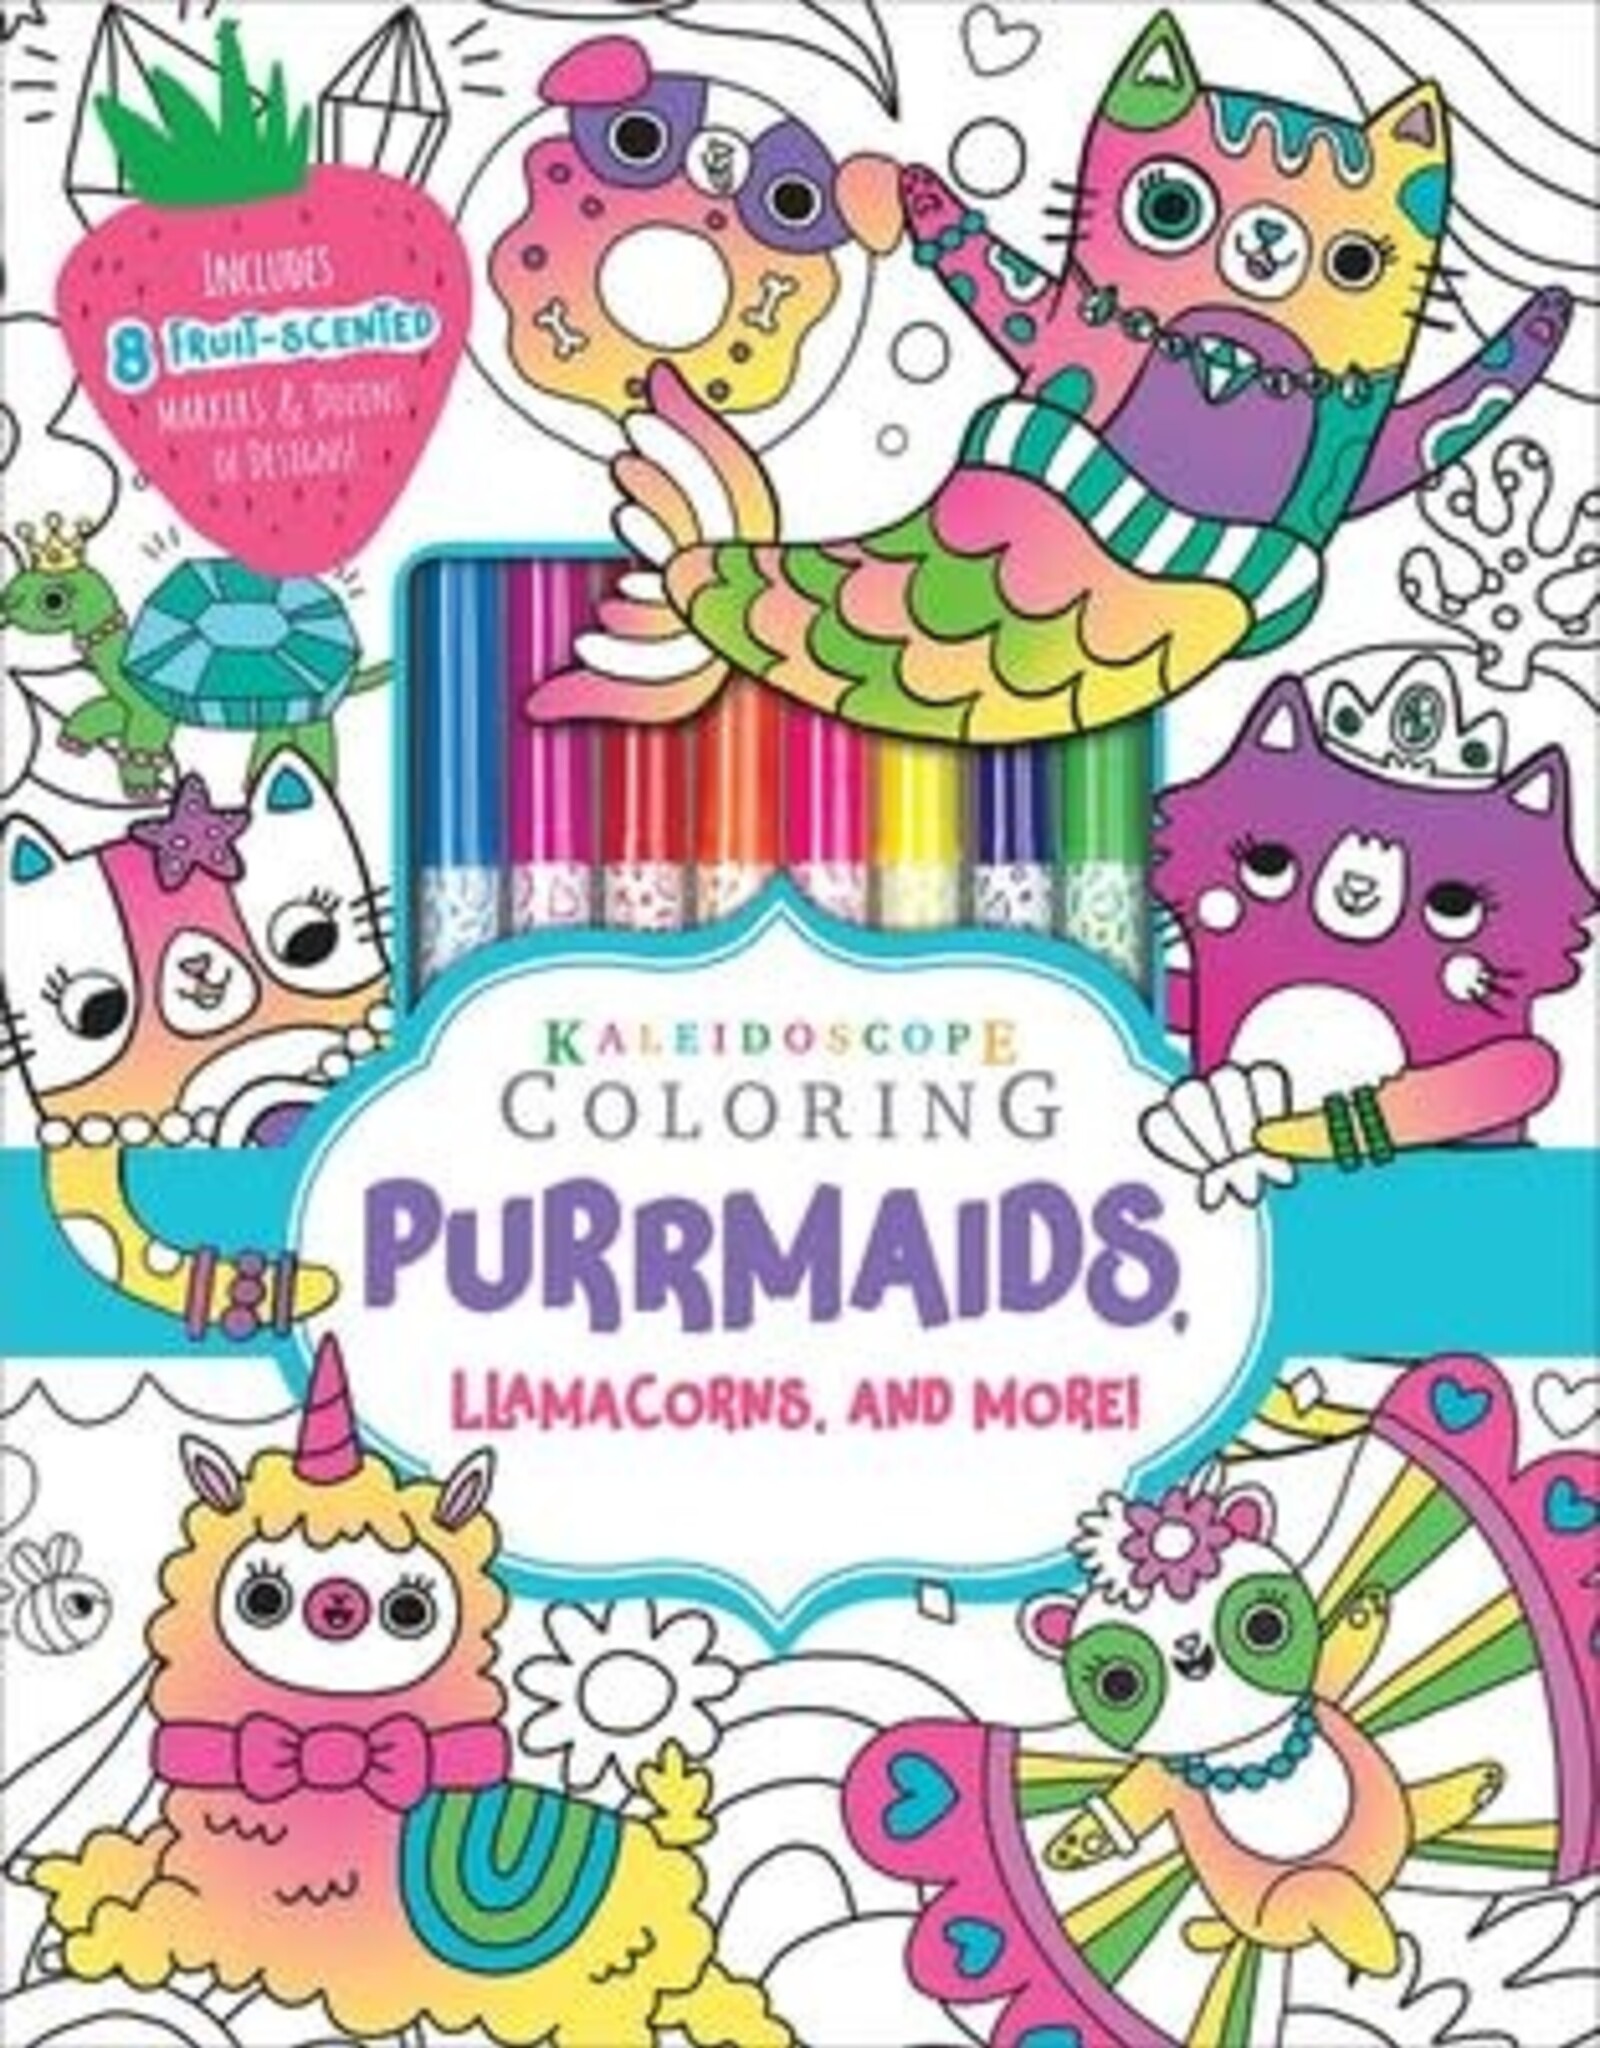 Simon and Schuster Kaleidoscope Coloring: Purrmaids, Llamacorns, and More!